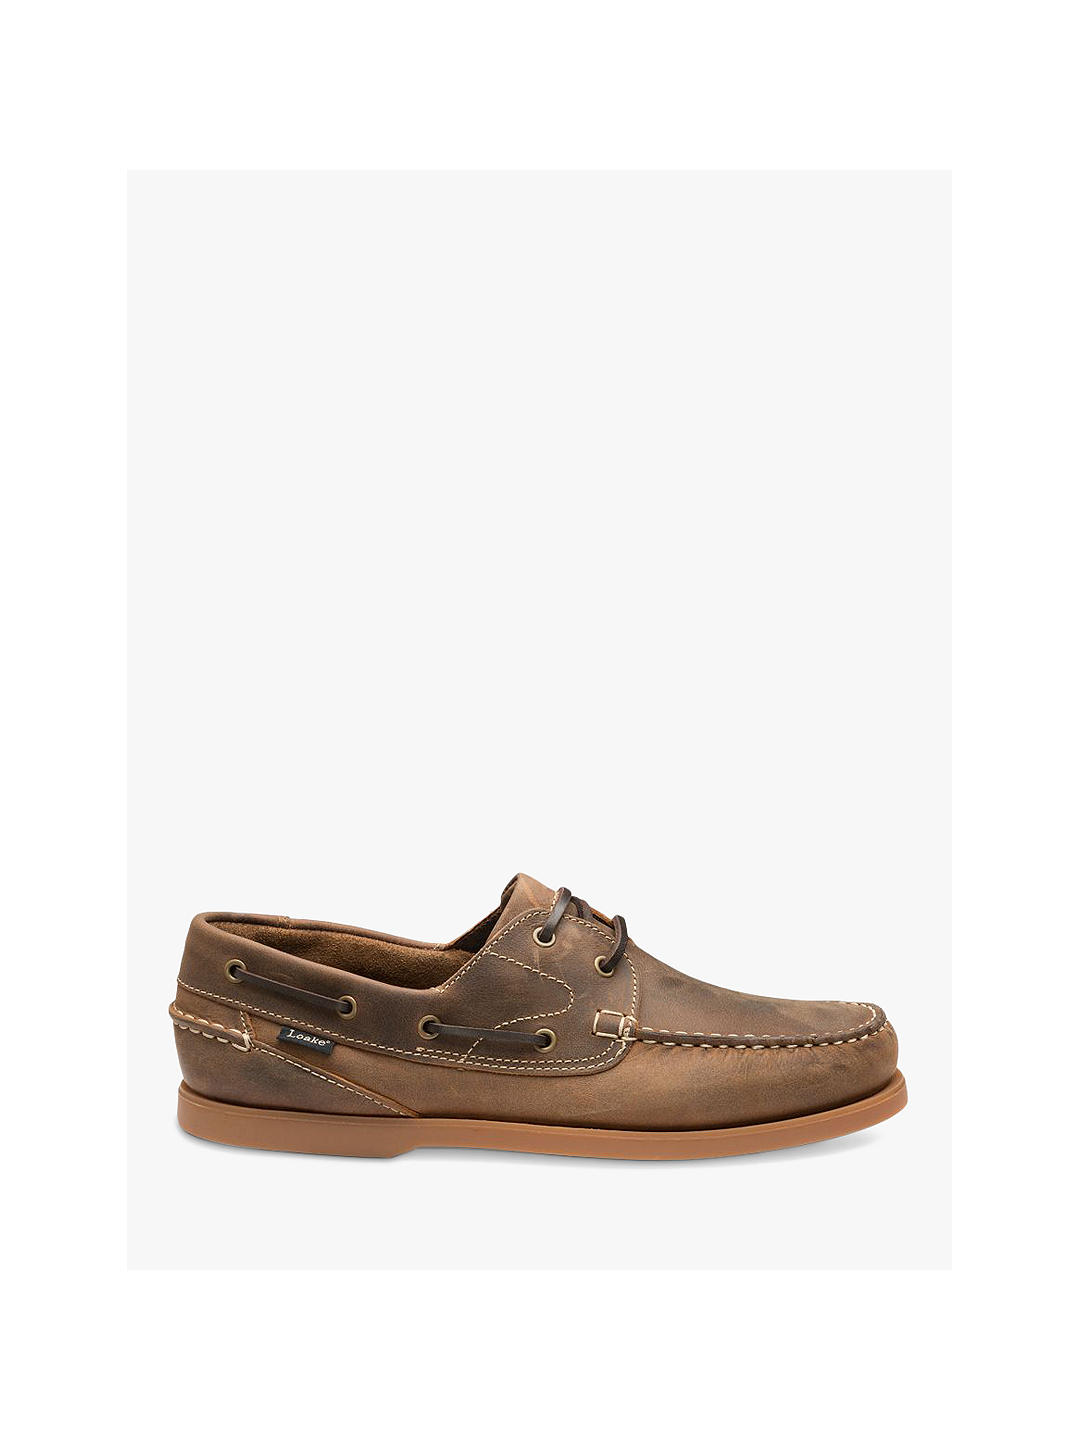 Loake Lymington Oiled Nubuck Boat Shoes, Brown